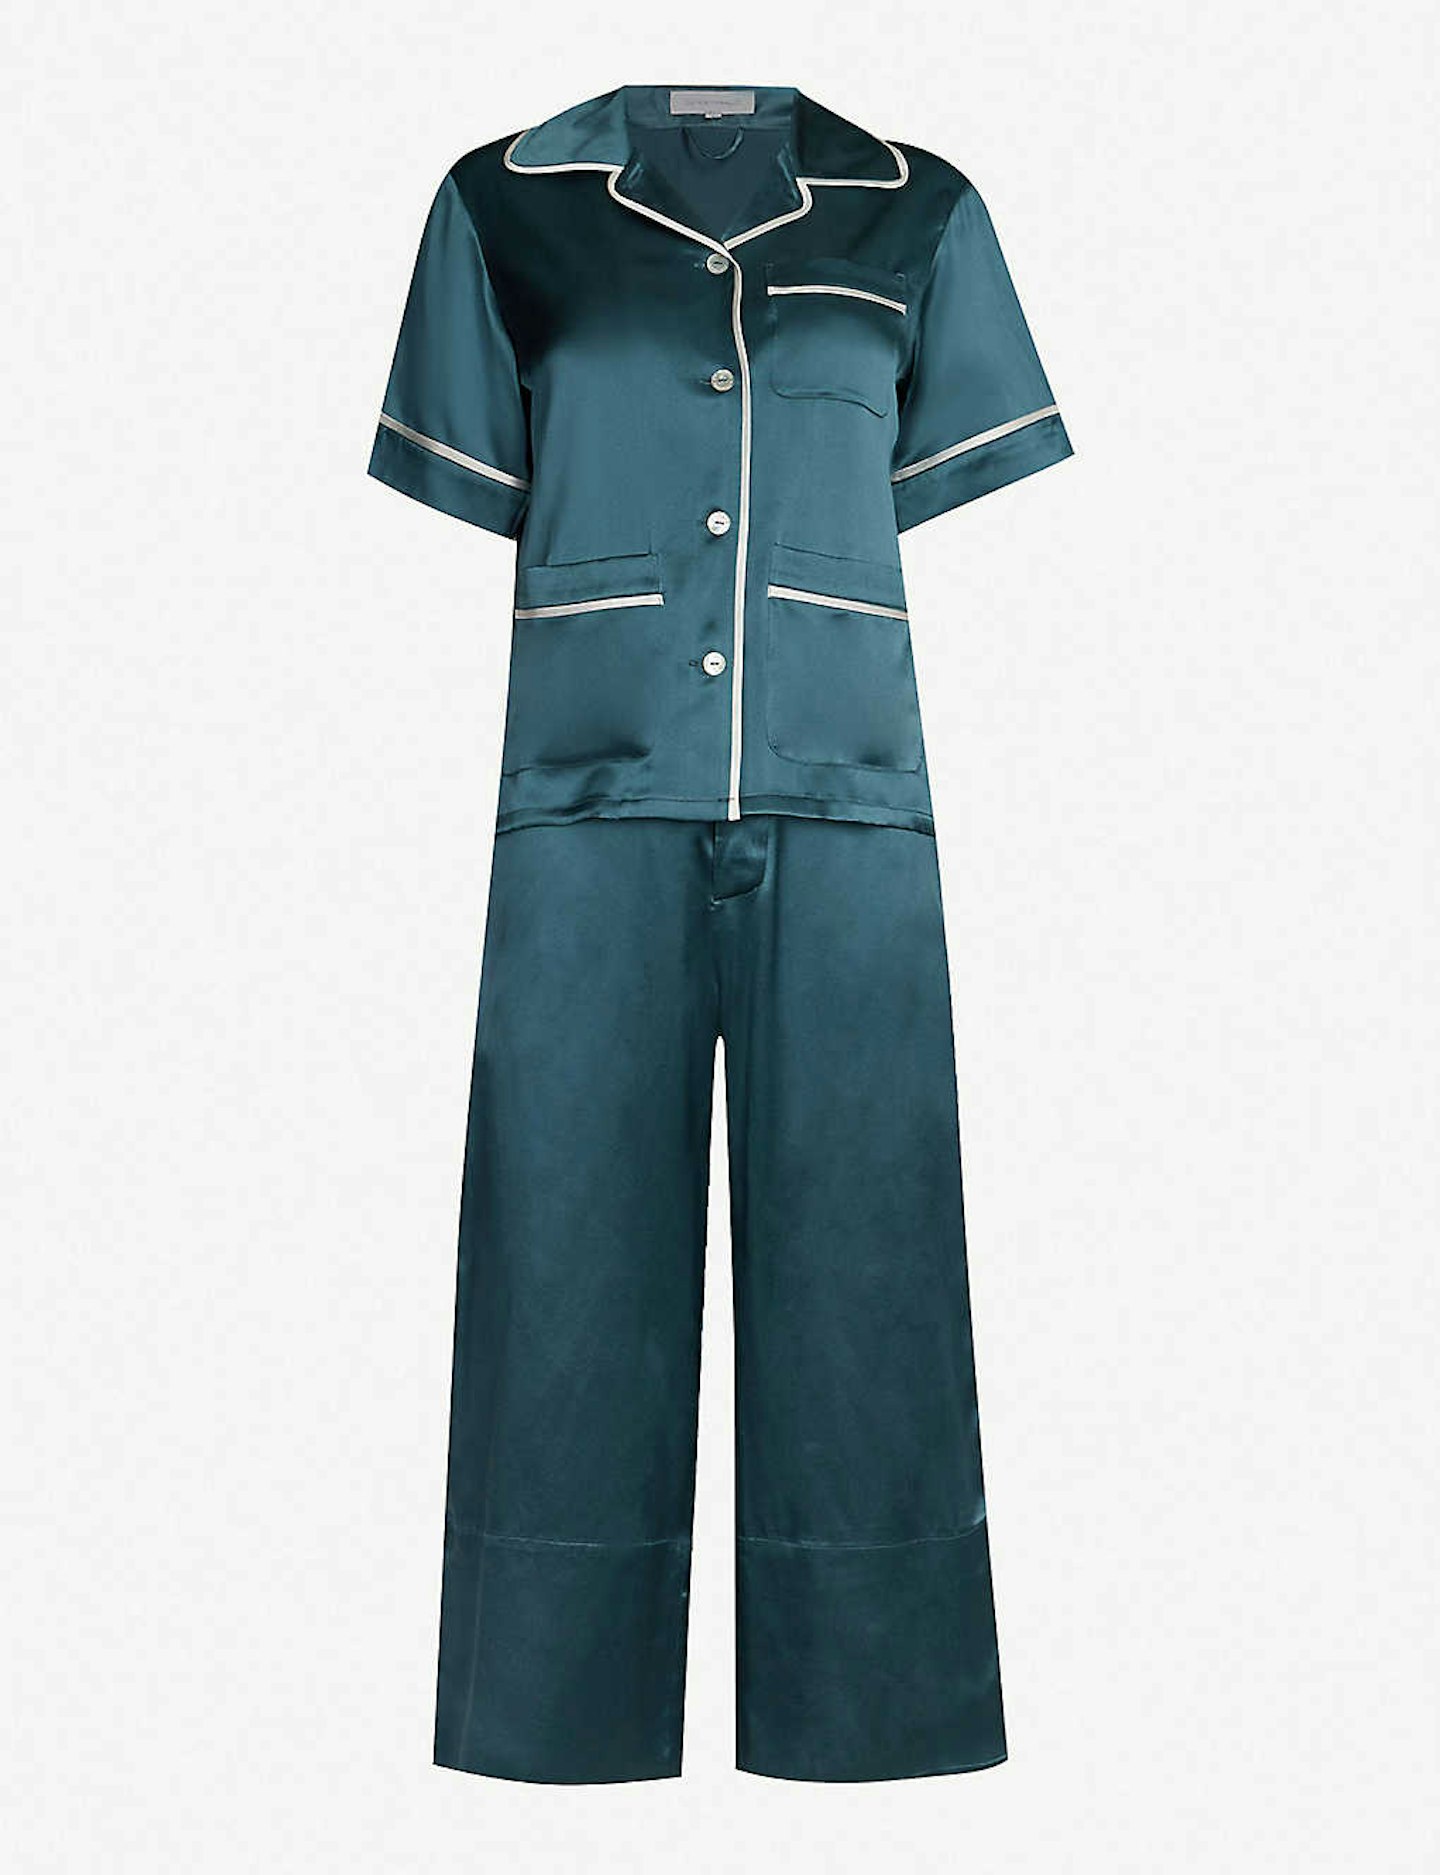 Olivia von Halle, Silk-Satin Pyjama Set, £415